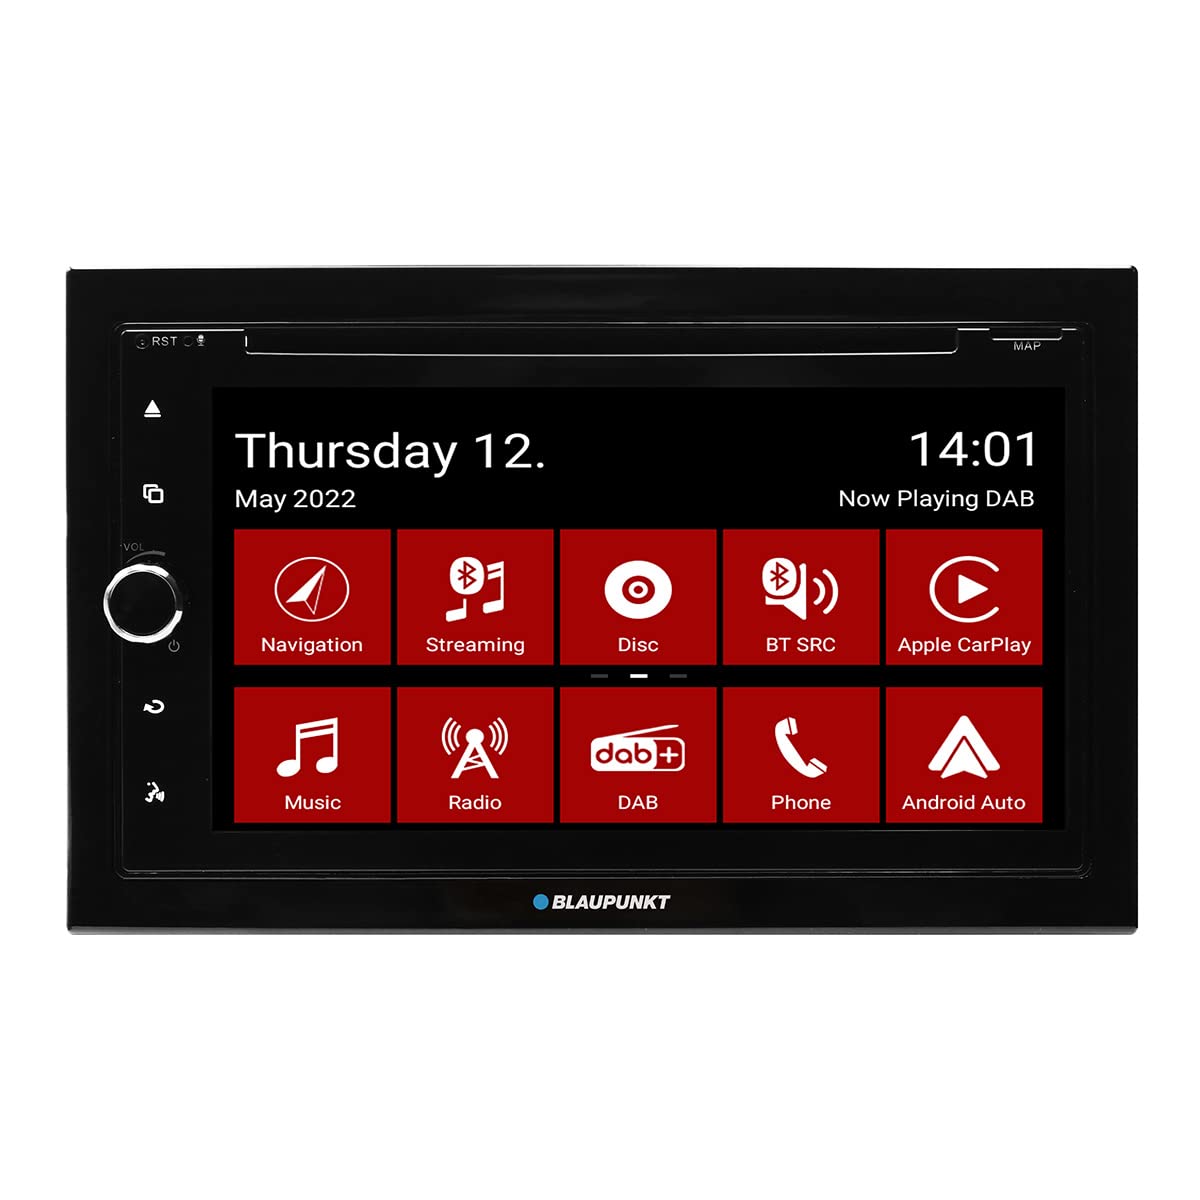 Blaupunkt Copenhagen 700 DAB (Navigation vorbereitet), 2-DIN Car-Multimedia, 6,75 Zoll Touchscreen, CarPlay, AndroidAuto, DAB+, Bluetooth, CD/DVD, 2xUSB, Aux, SD, 180 Watt von Blaupunkt